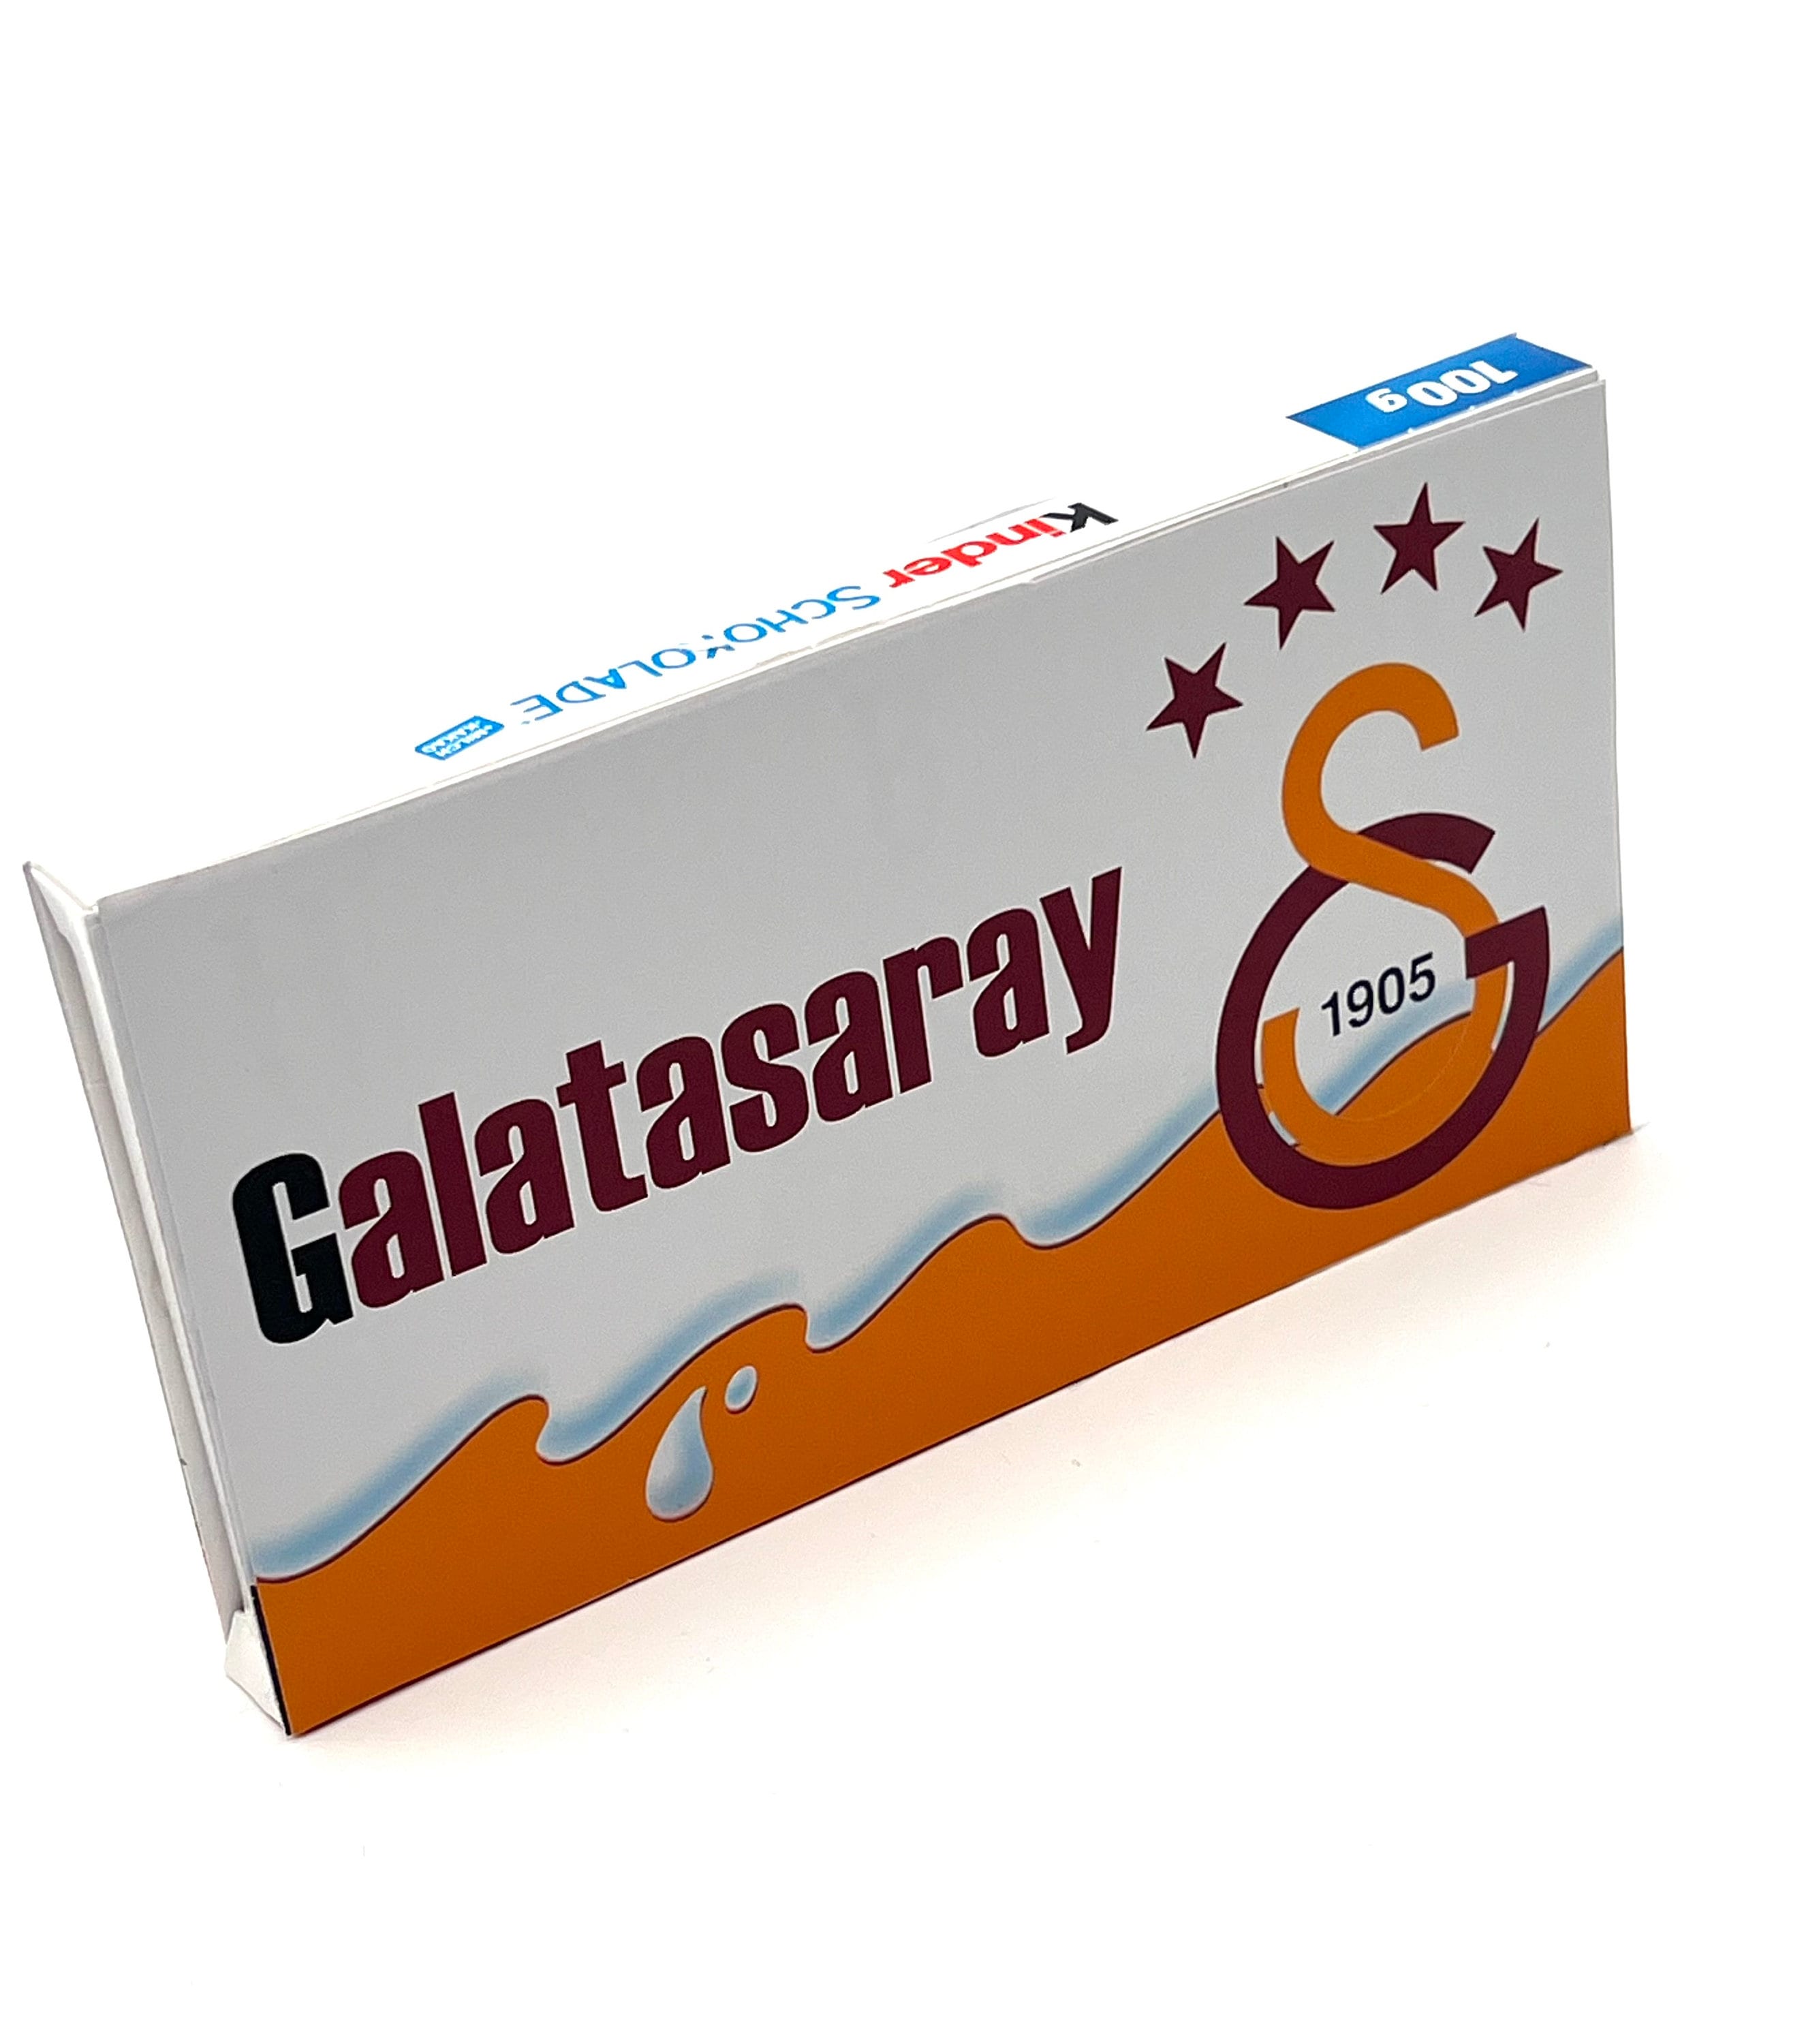 Galatasaray - .de